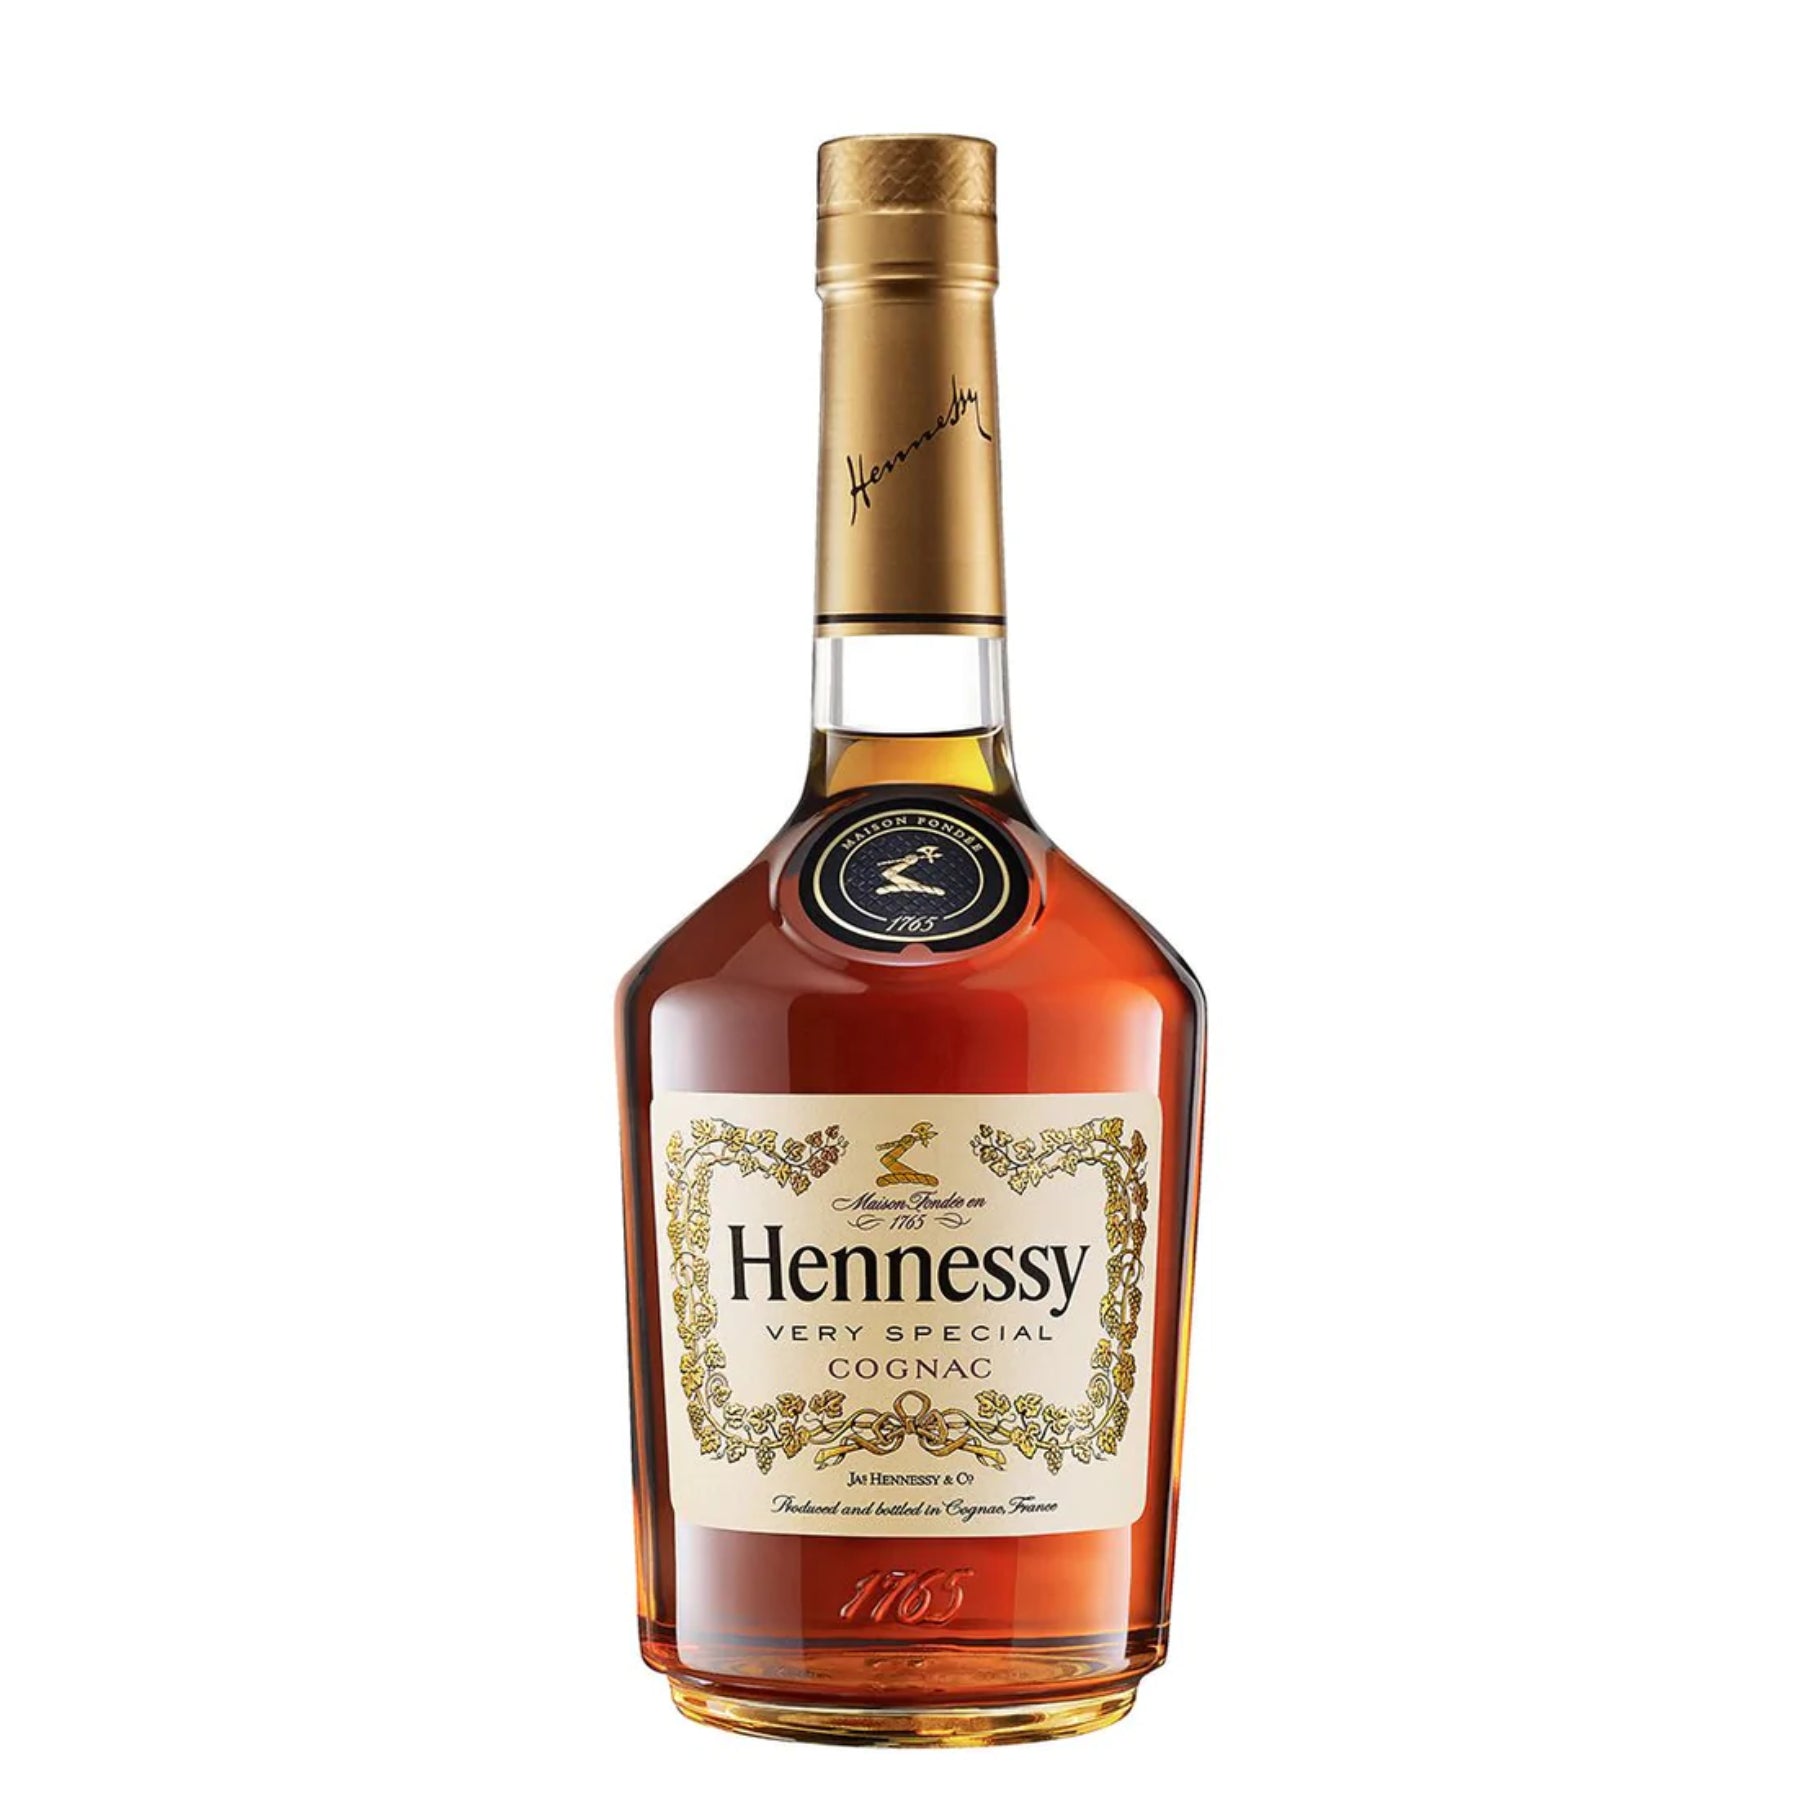 Hennessy Fine de Cognac, France  prices, stores, product reviews